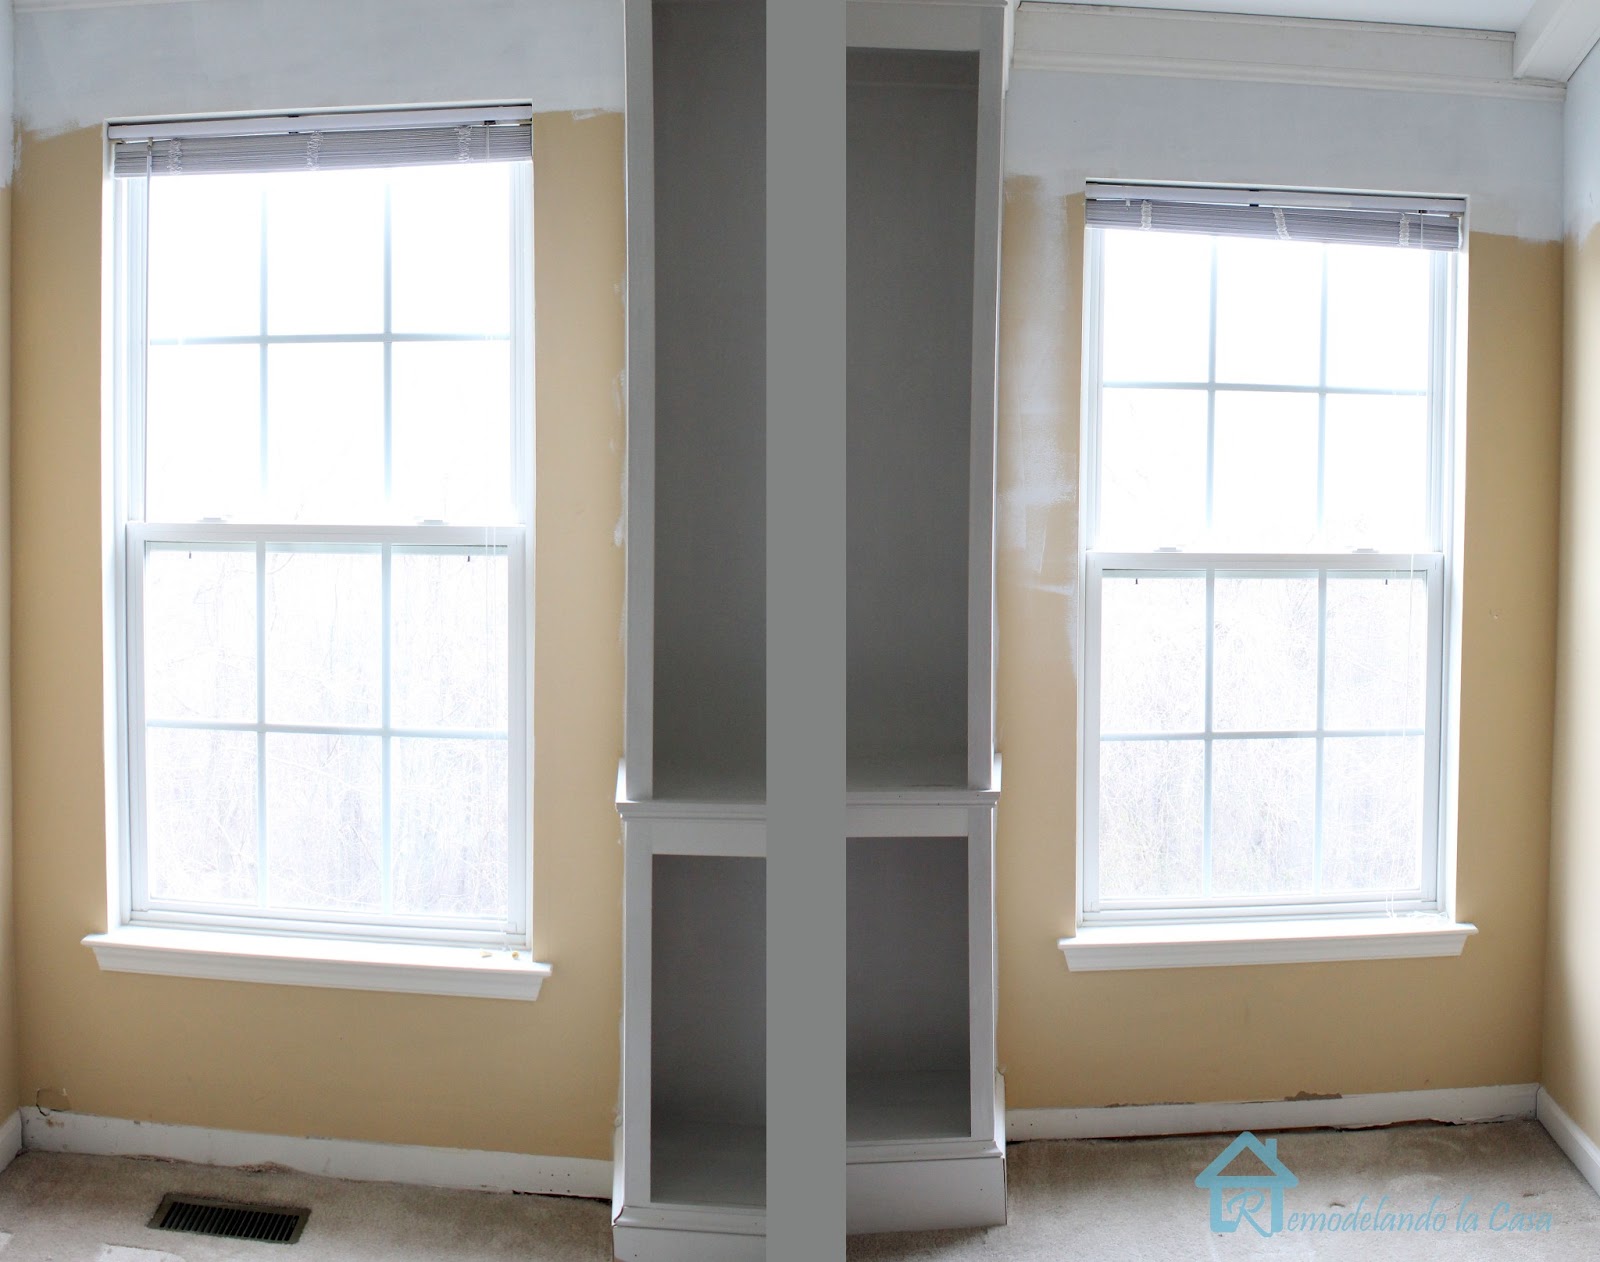 How to Install Window Trim - Remodelando la Casa